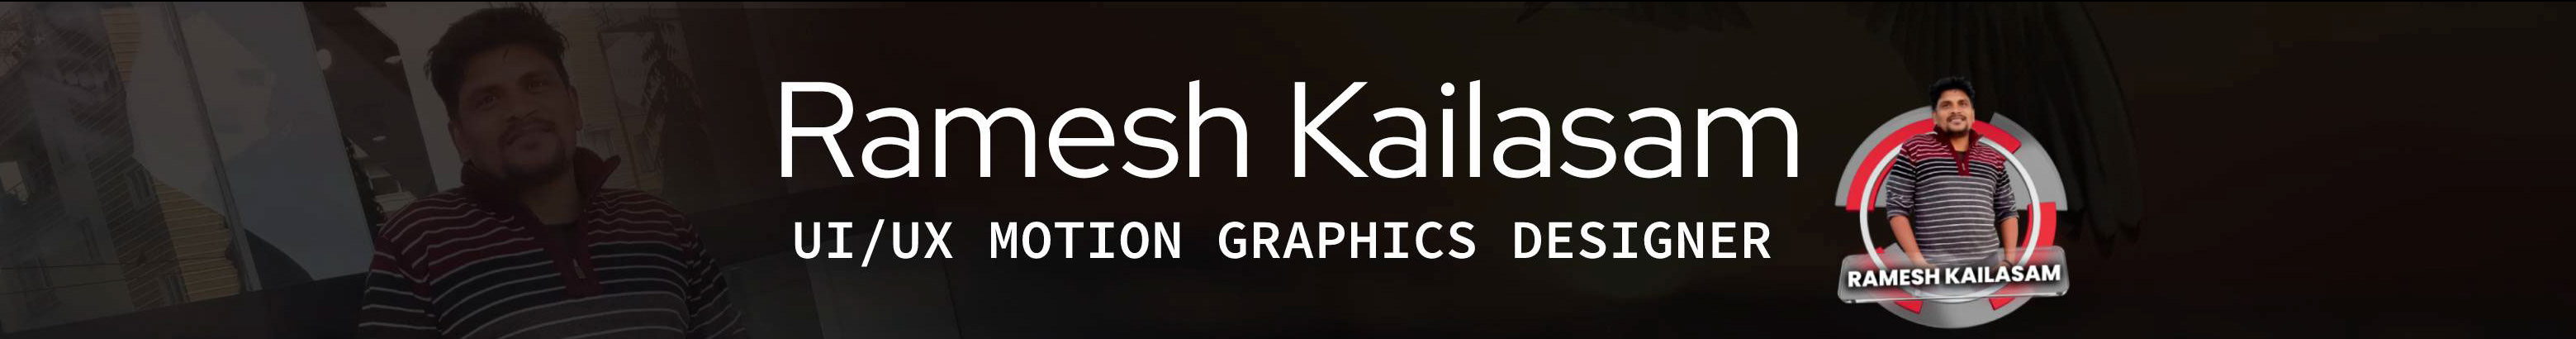 Ramesh Kailasam's profile banner